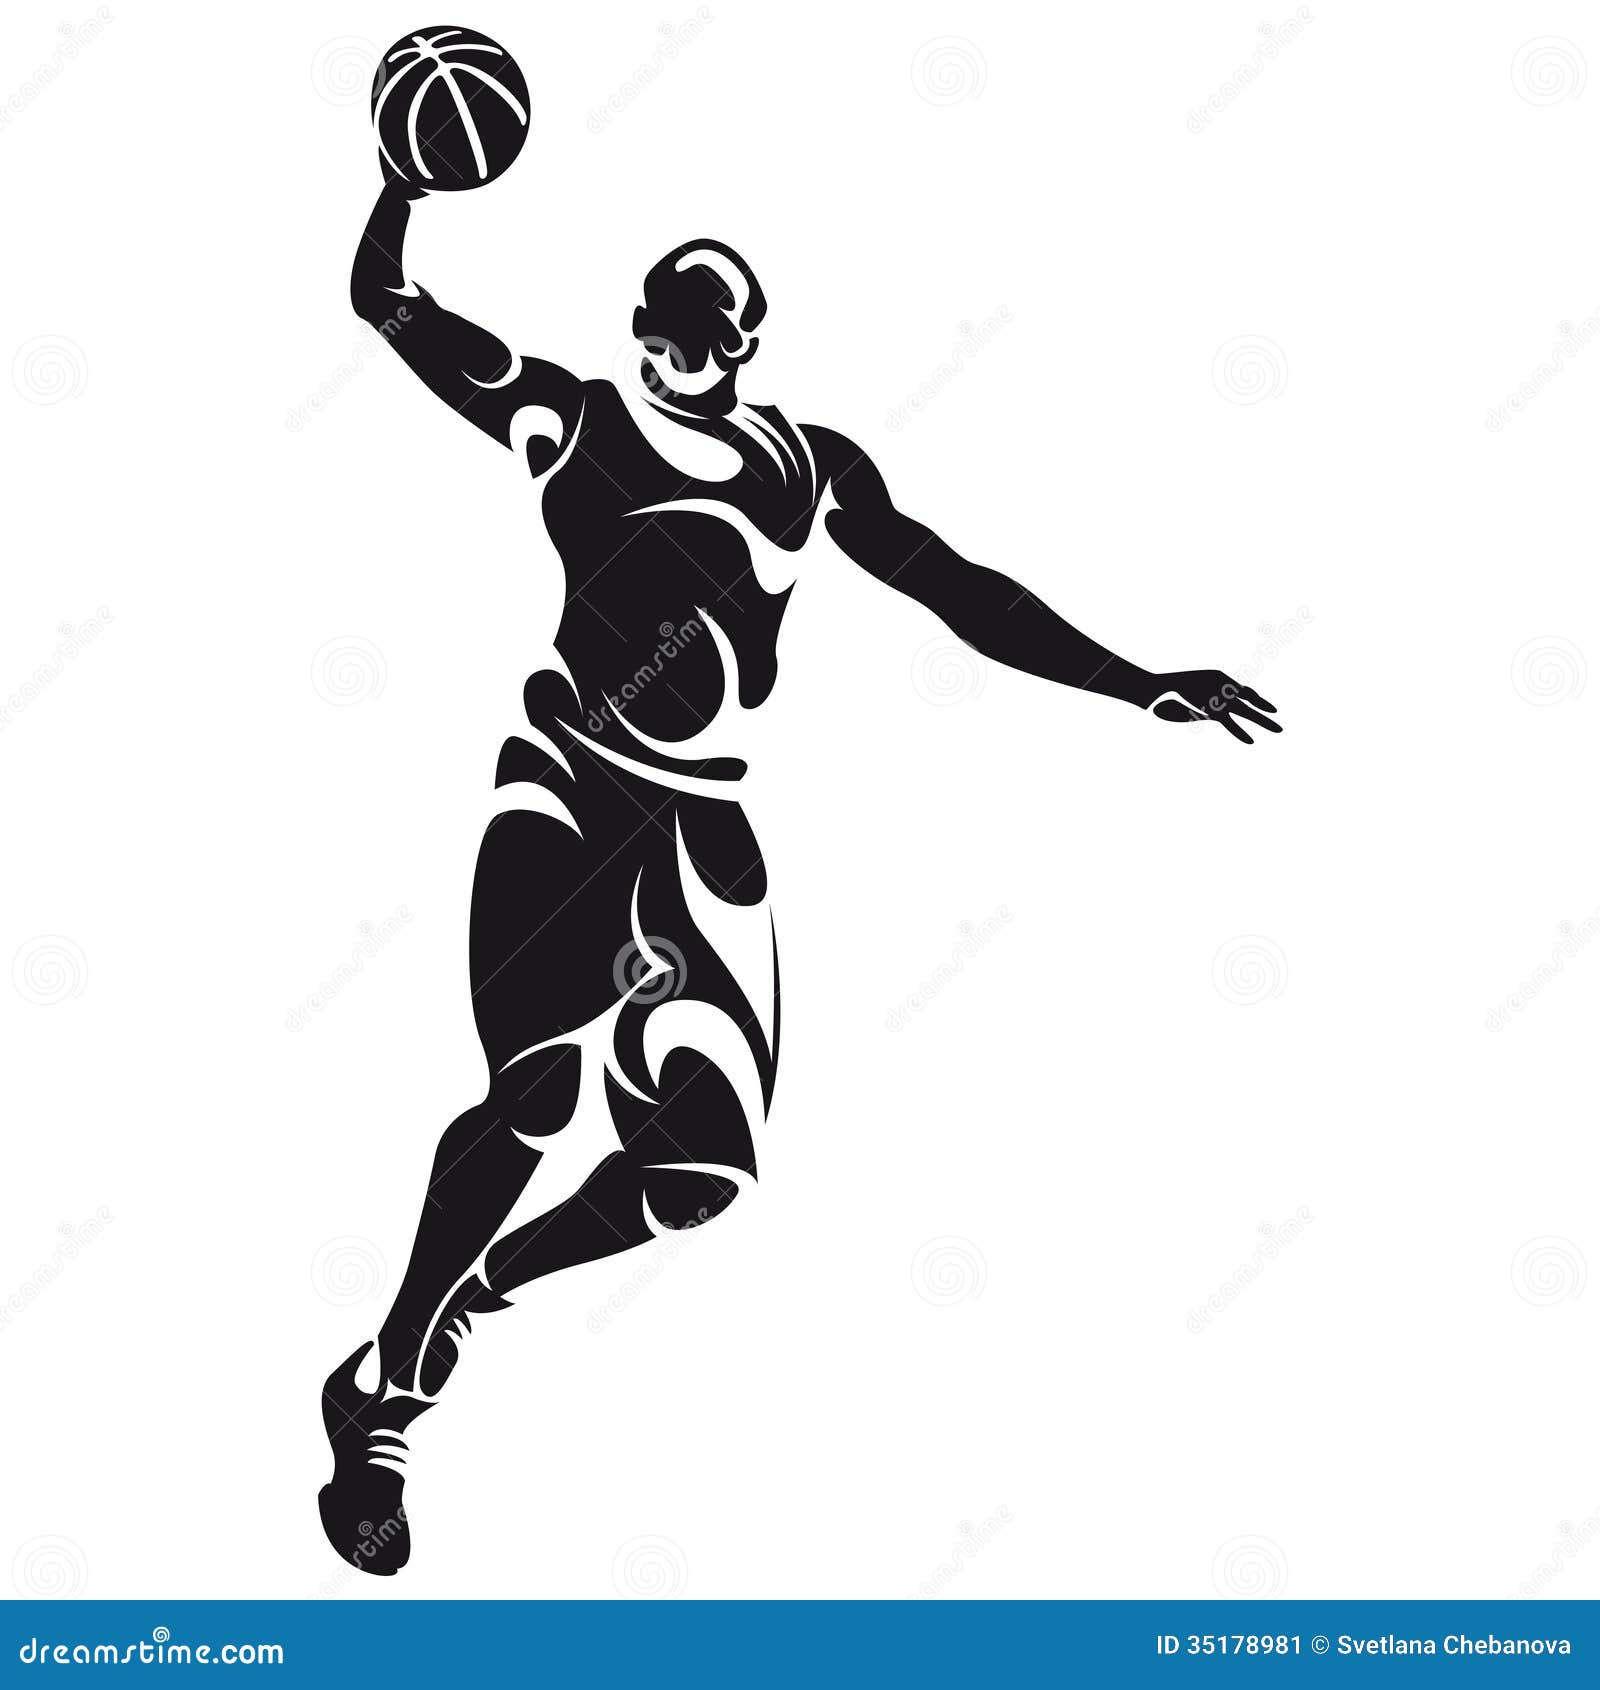 Basketball Player, Silhouette Stock Image - Image: 35178981